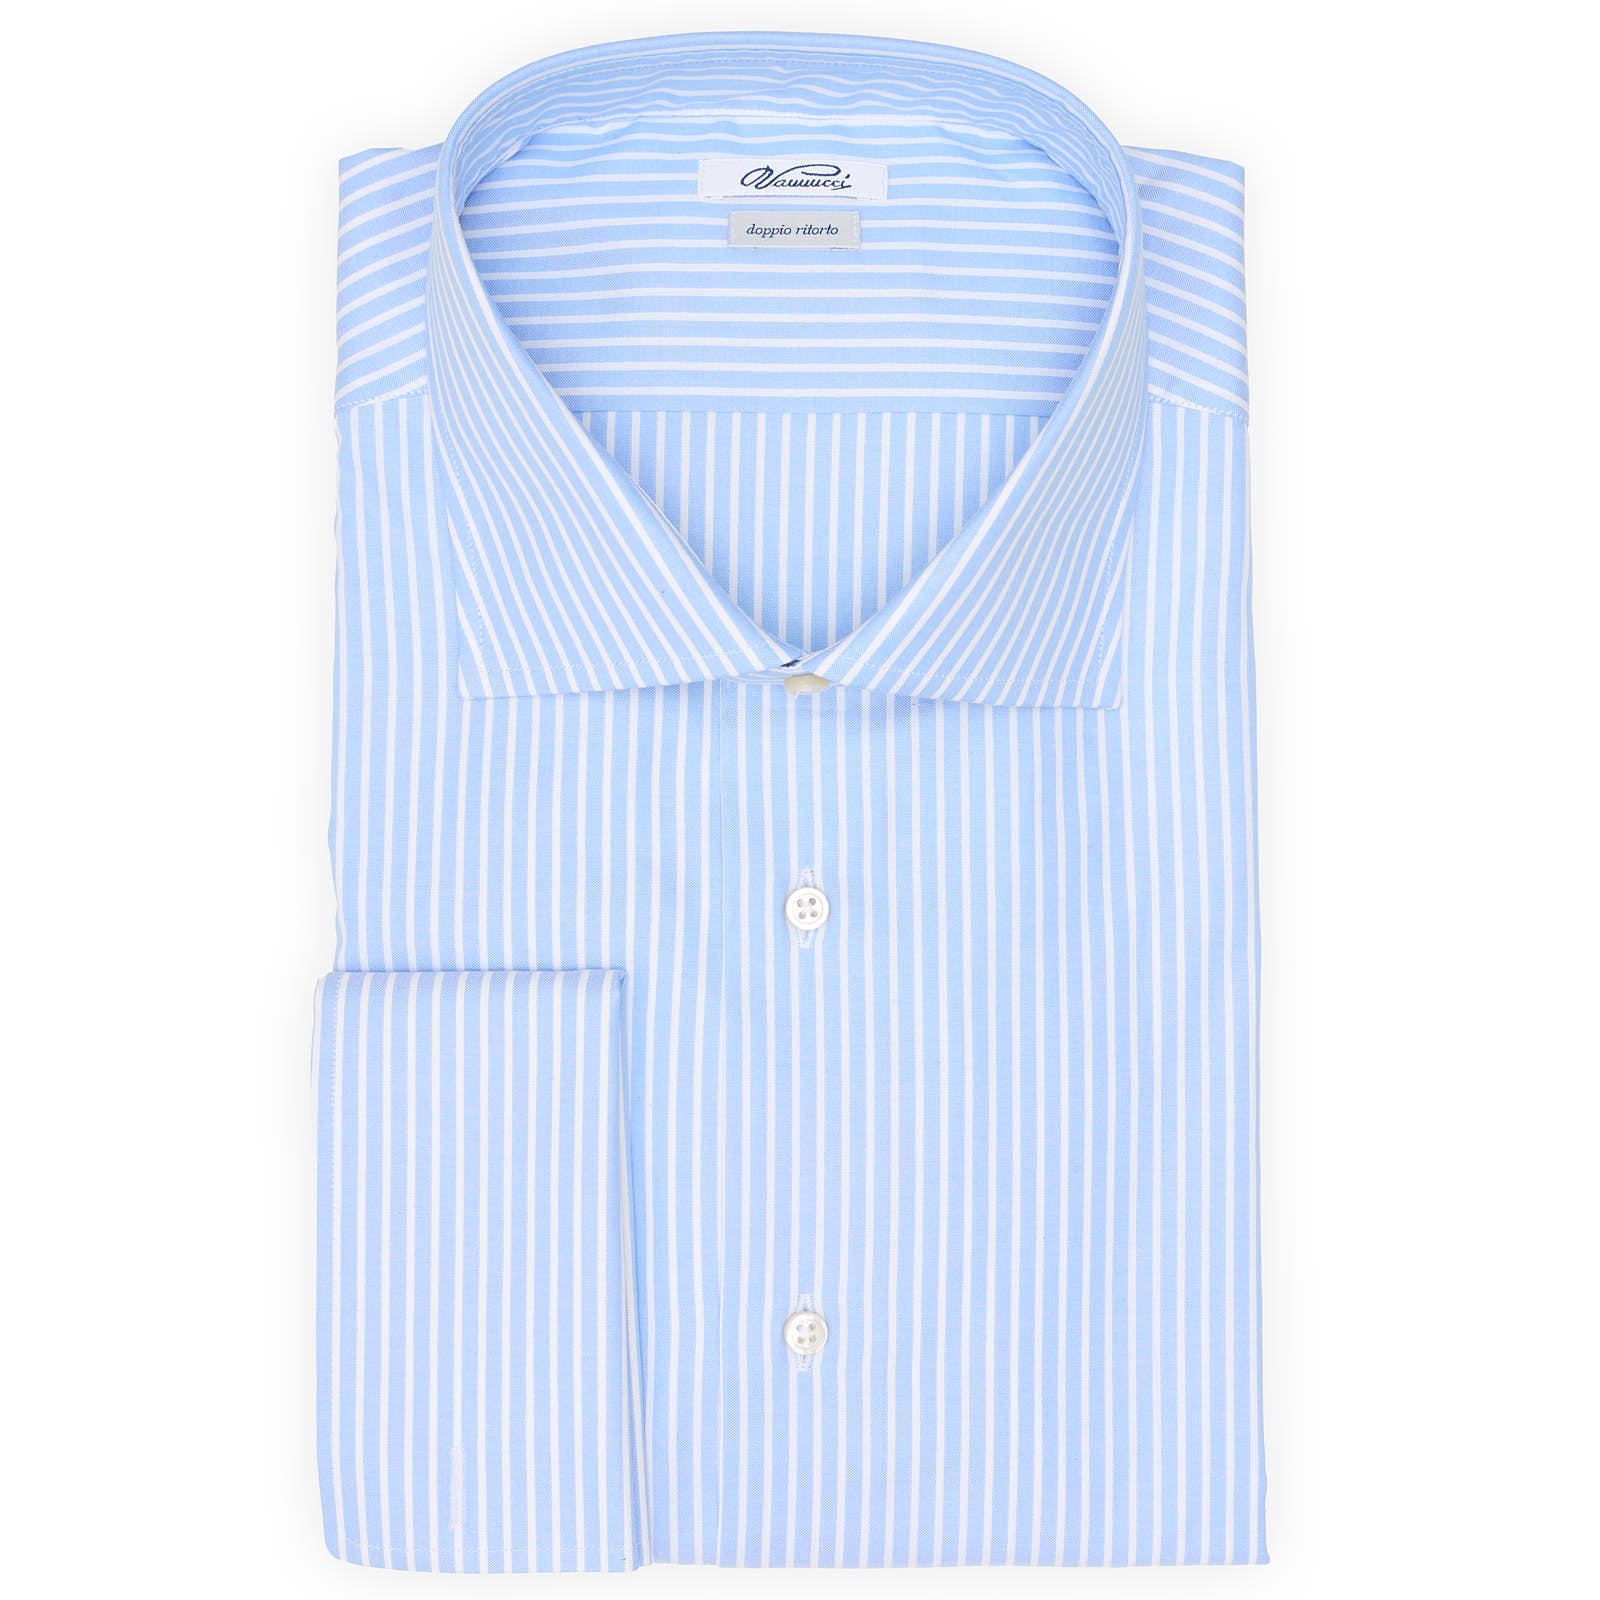 VANNUCCI Milano Blue Pencil-Striped Cotton French Cuff Dress Shirt NEW